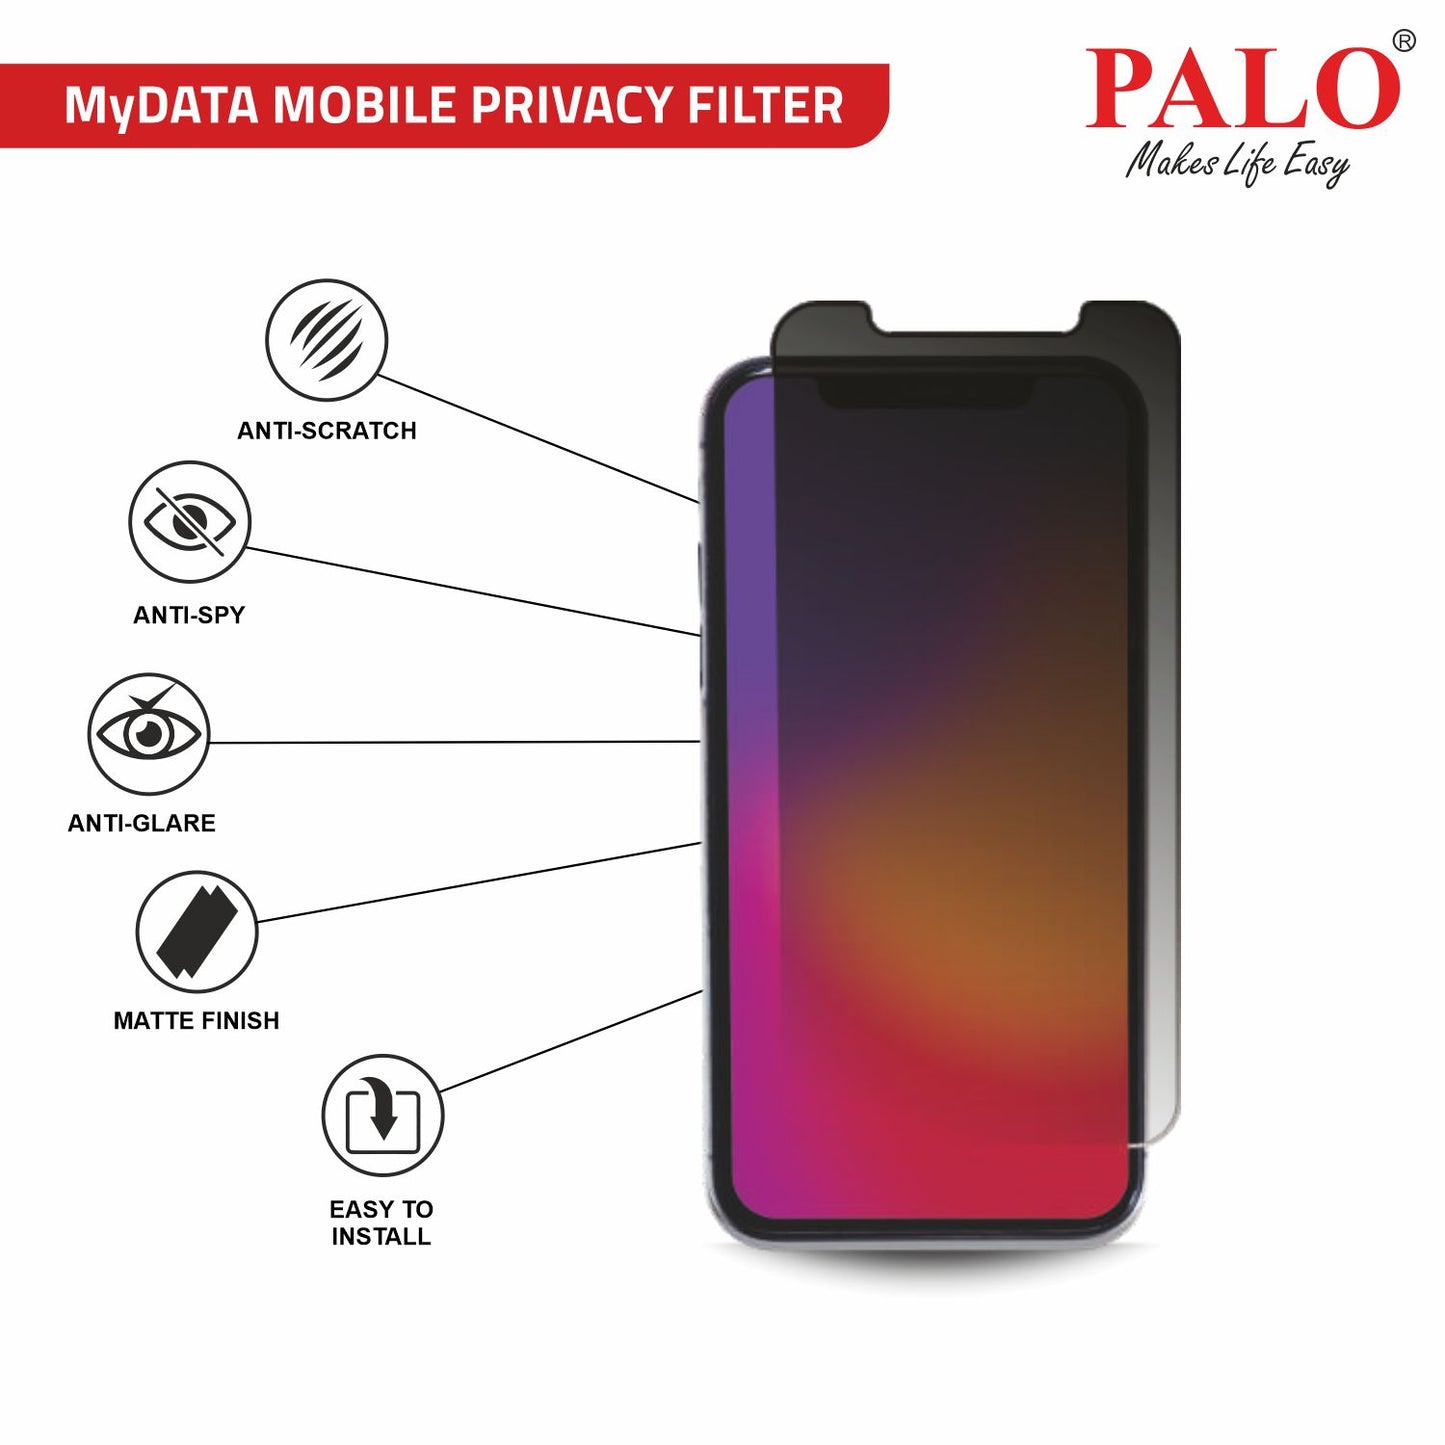 PALO MyDATA Mobile Privacy Filter - Portrait